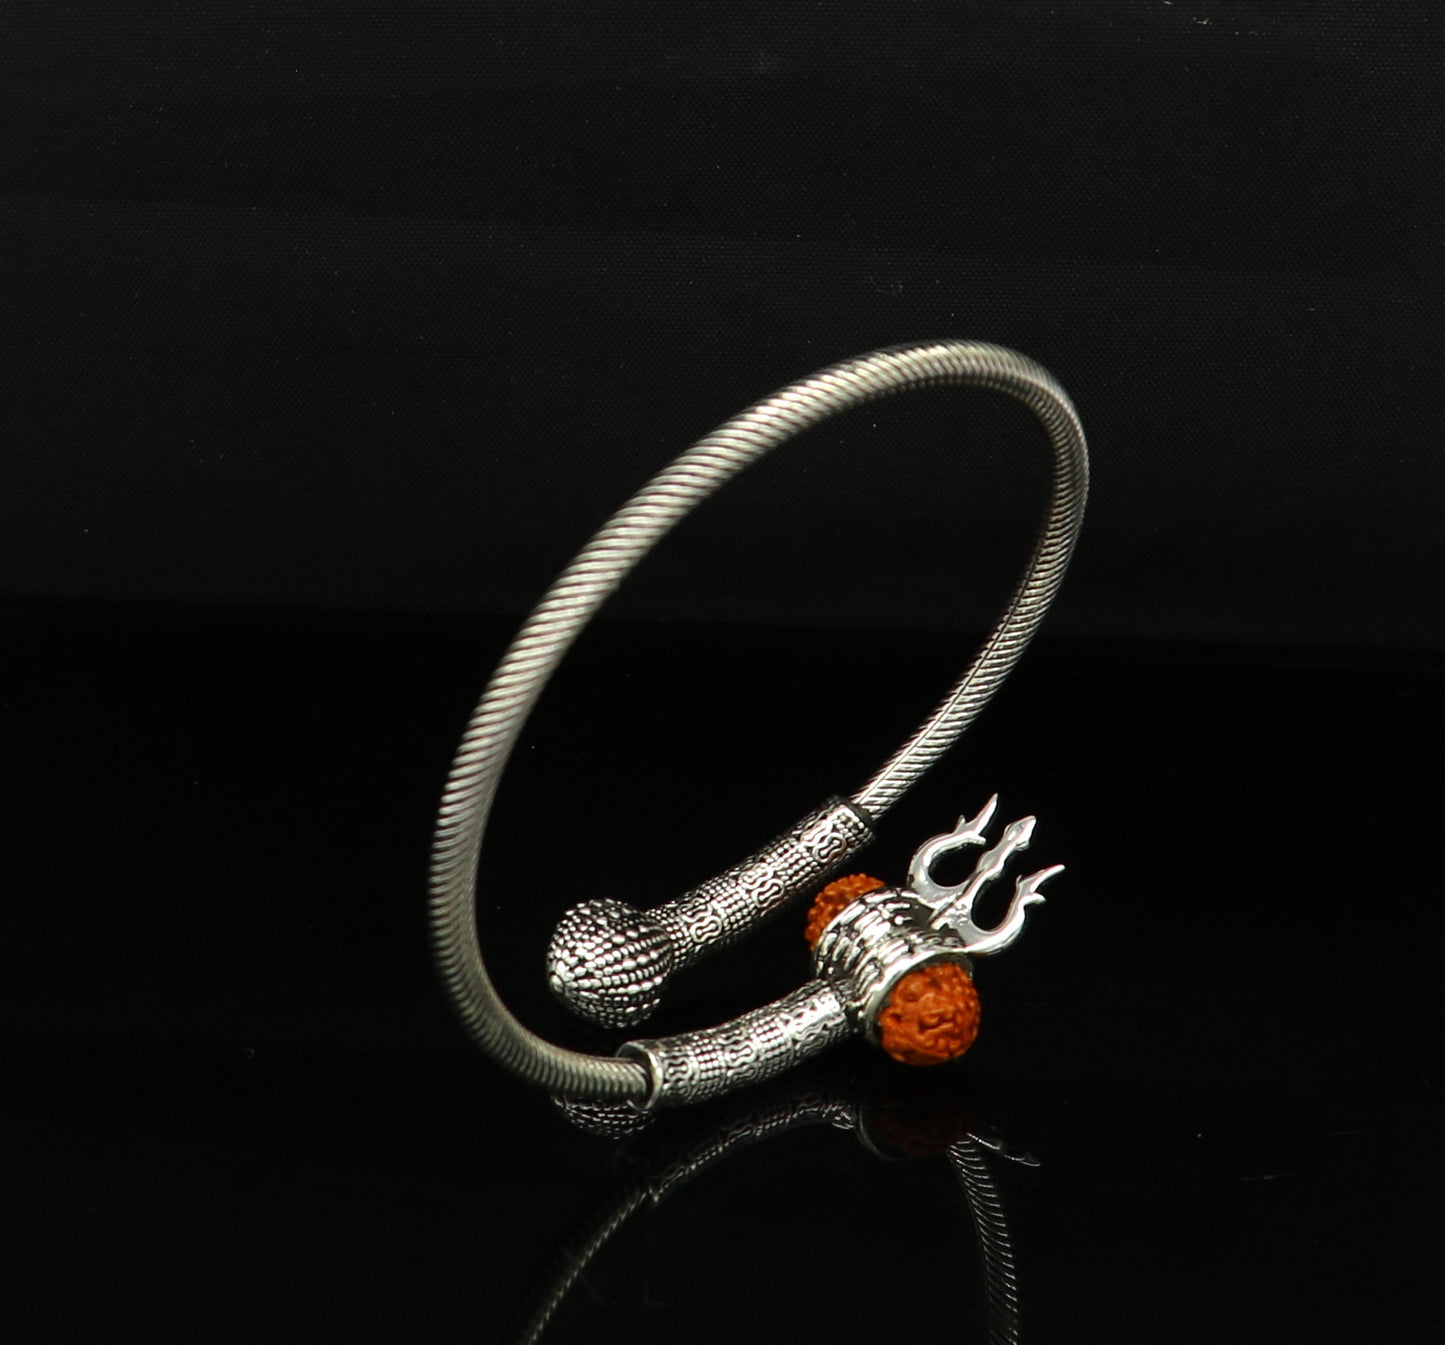 925 sterling silver flexible cuff bracelet, lord Shiva trident designer fancy bracelet with gorgeous Rudraksha beads, best gifting nsk336 - TRIBAL ORNAMENTS